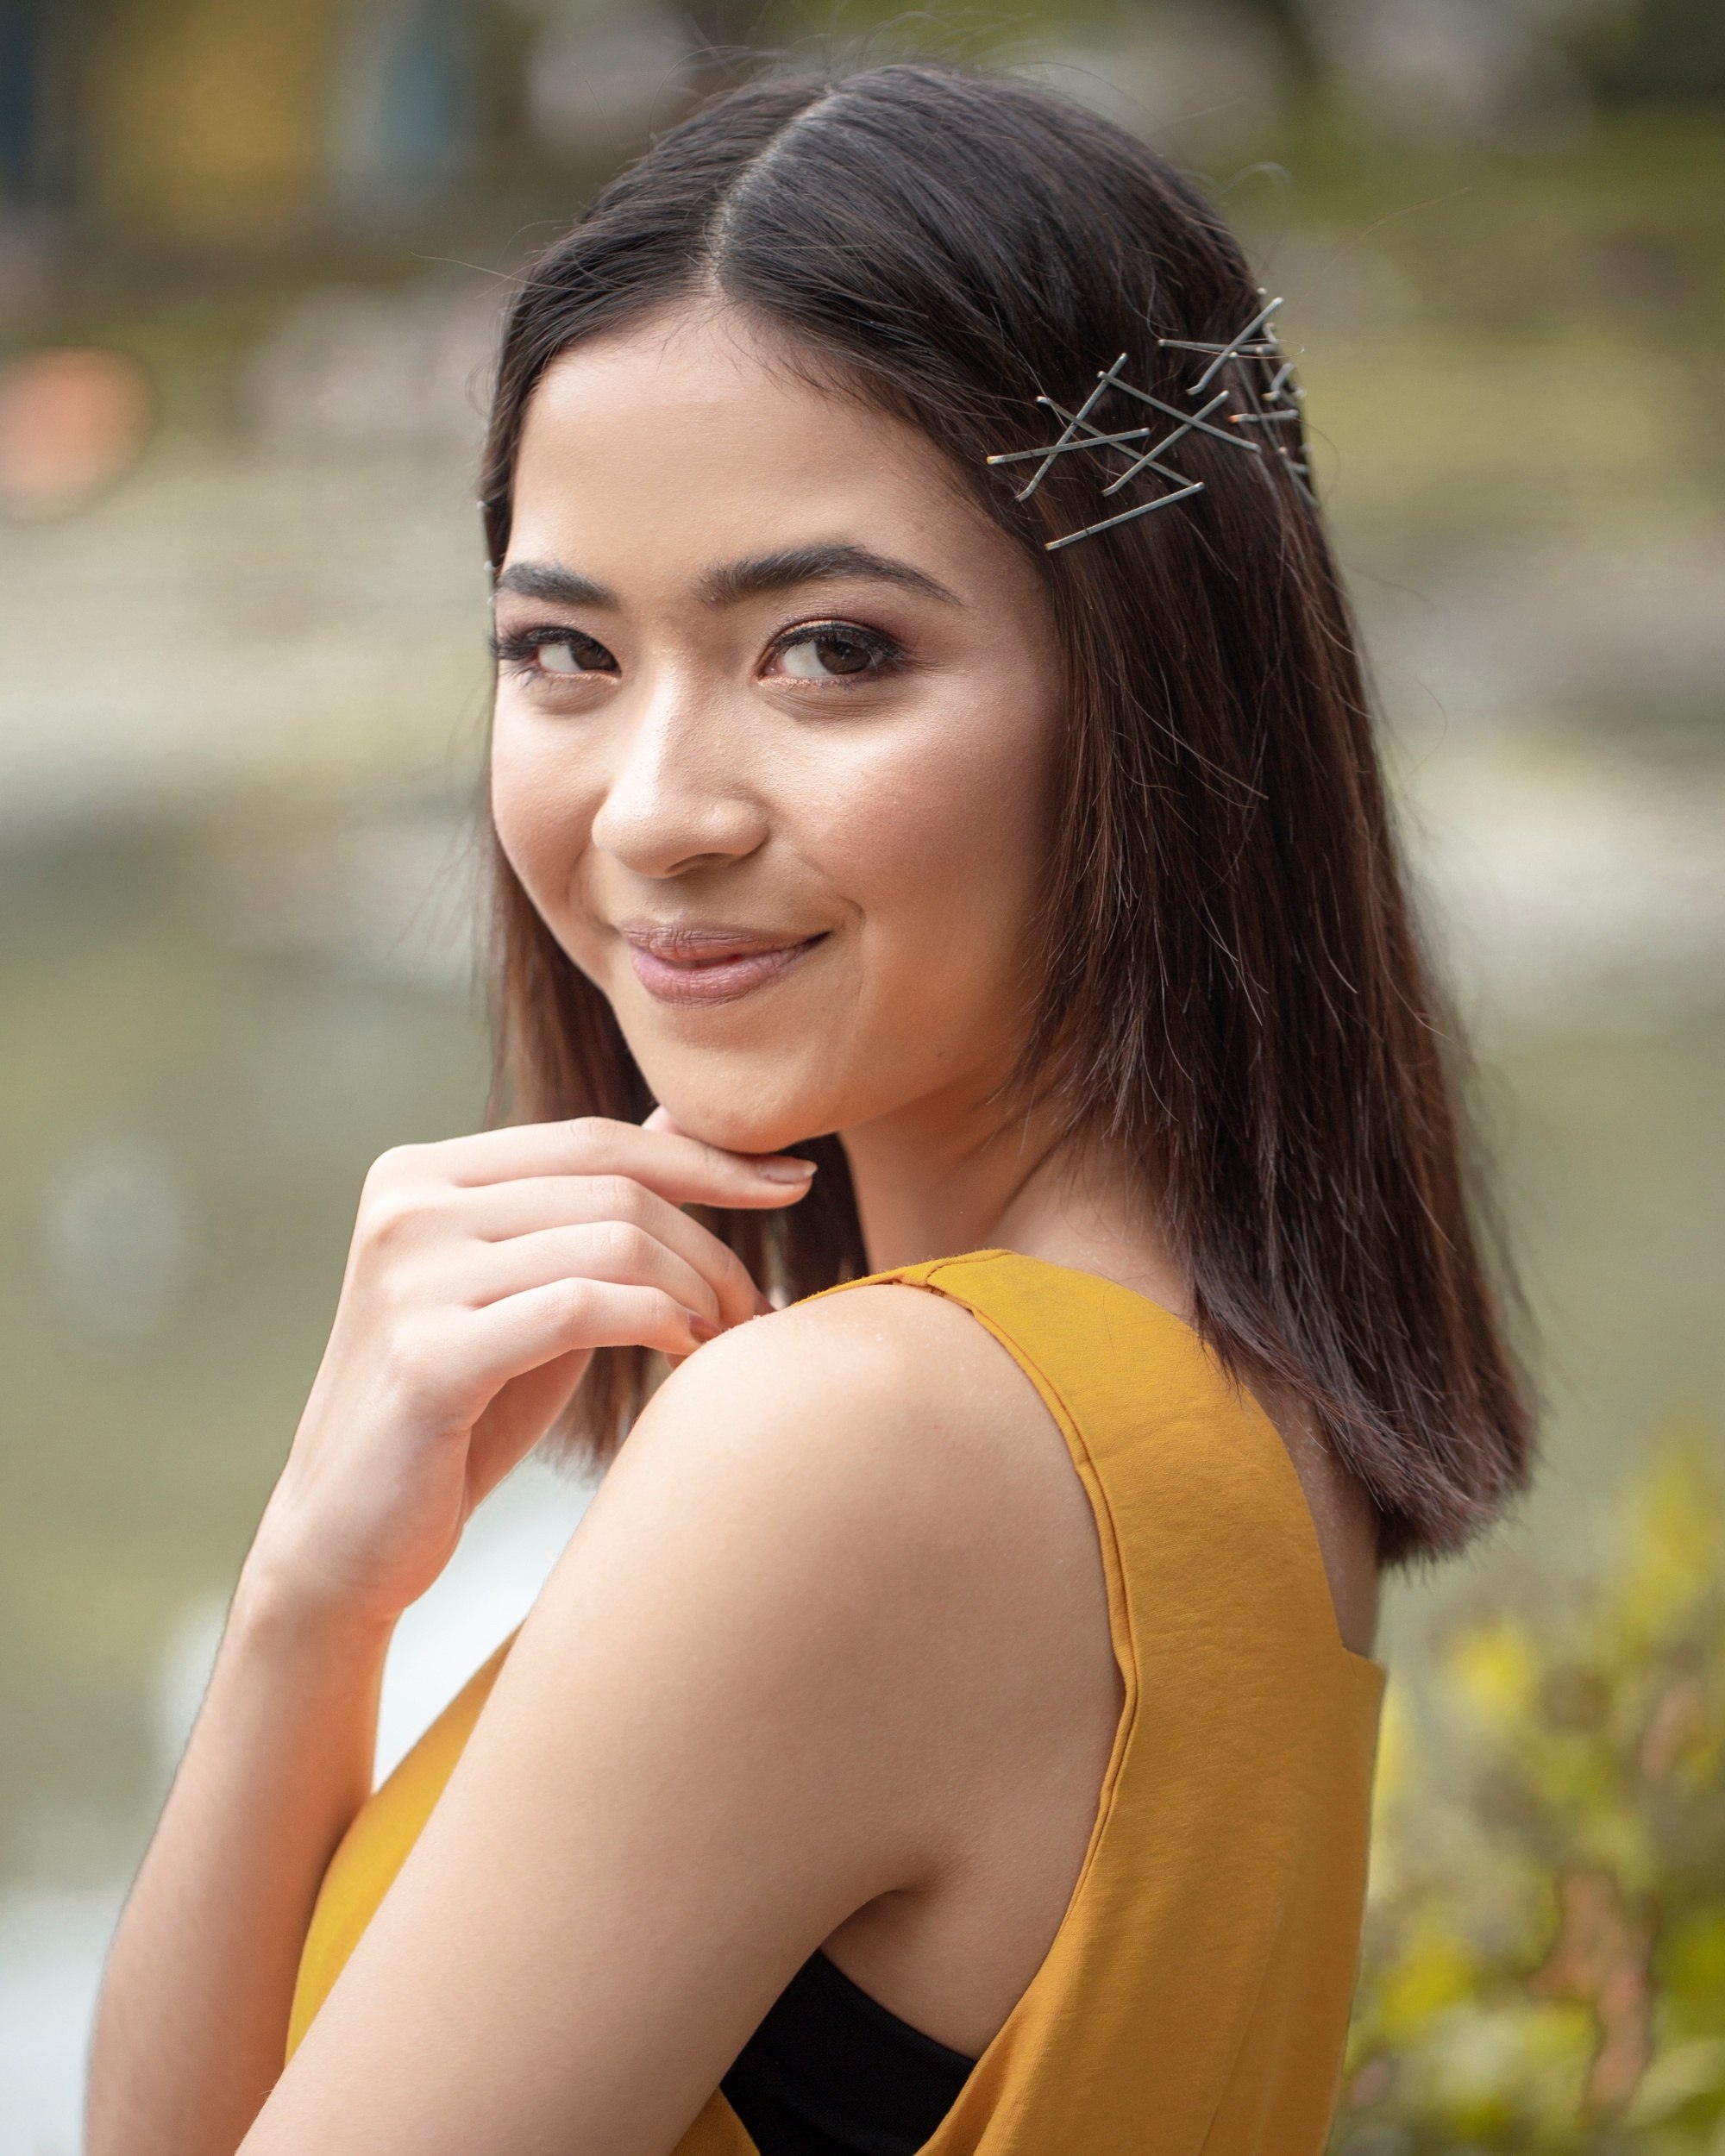 Bobby pin hair crown: Asian woman with bobby pin hair crown smiling